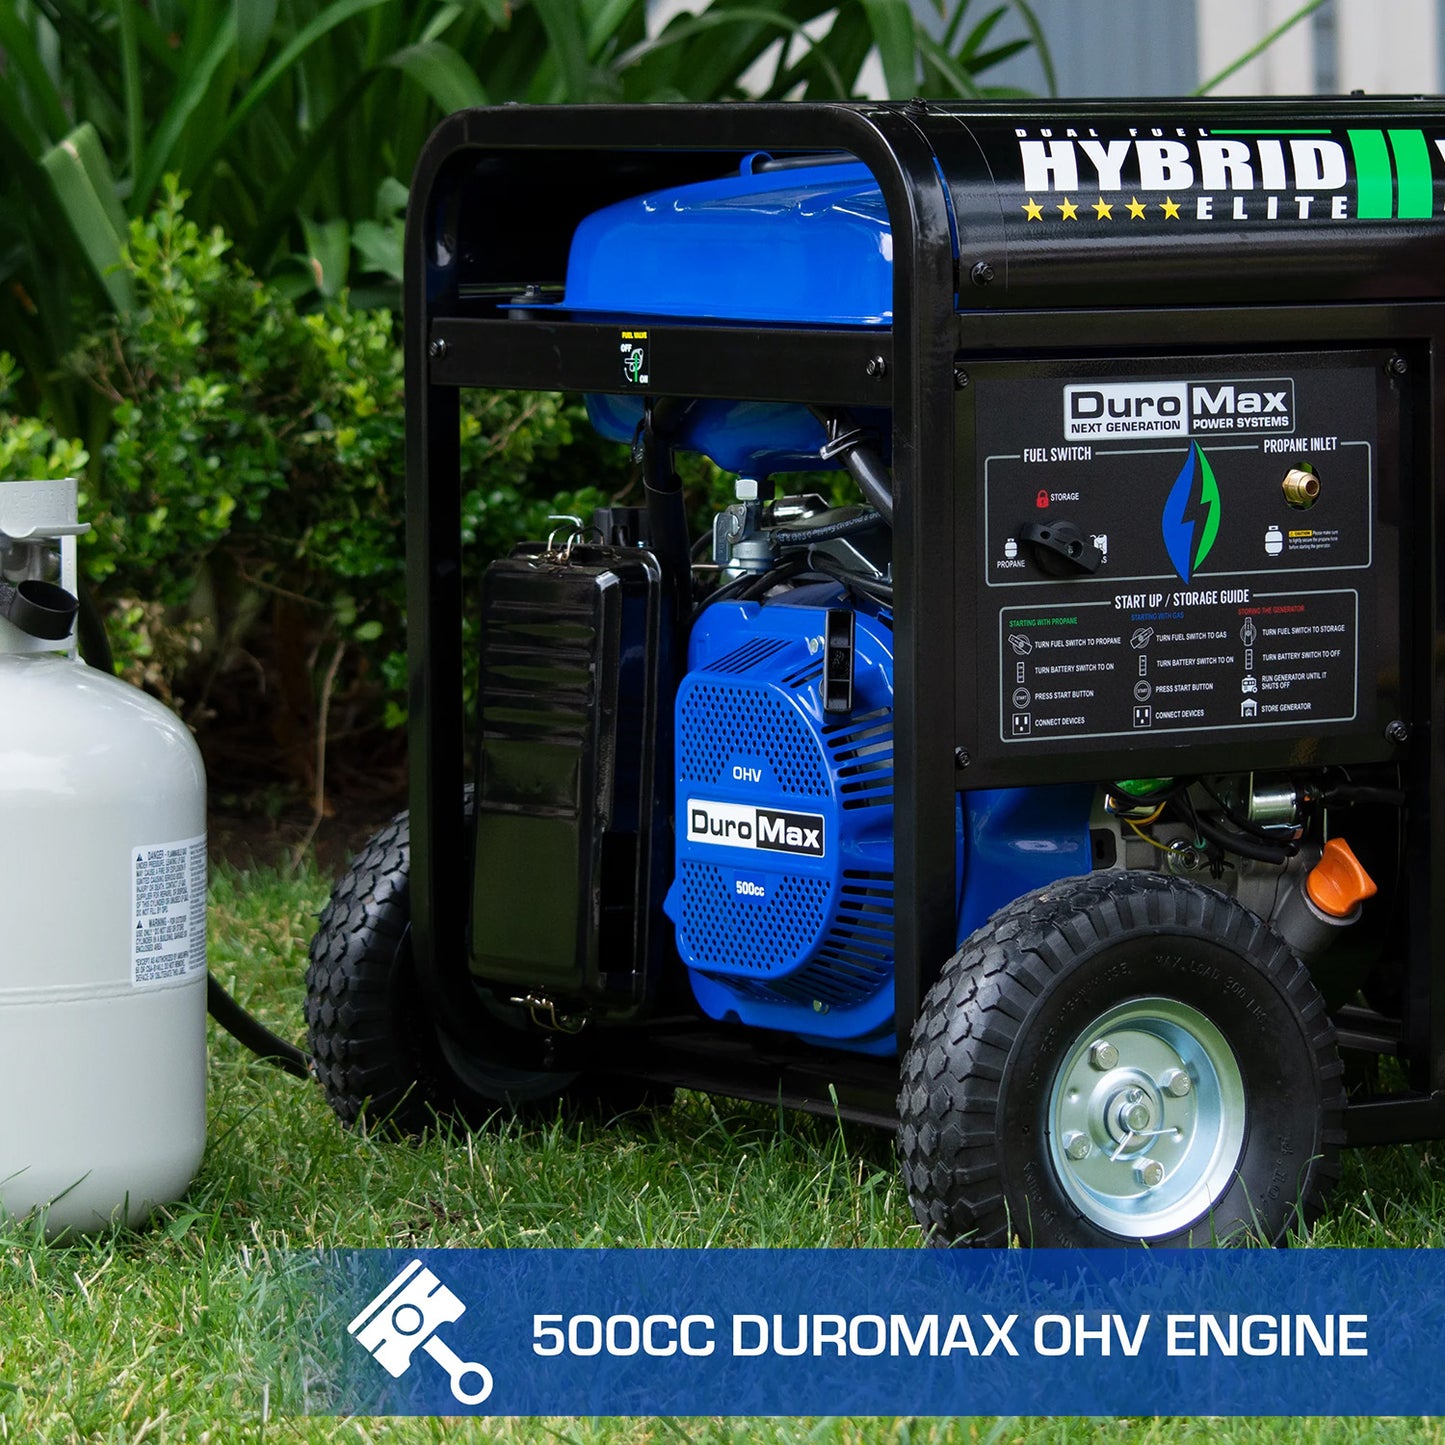 DuroMax XP13000EH Dual Fuel Portable Generator - 500CC OHV Engine